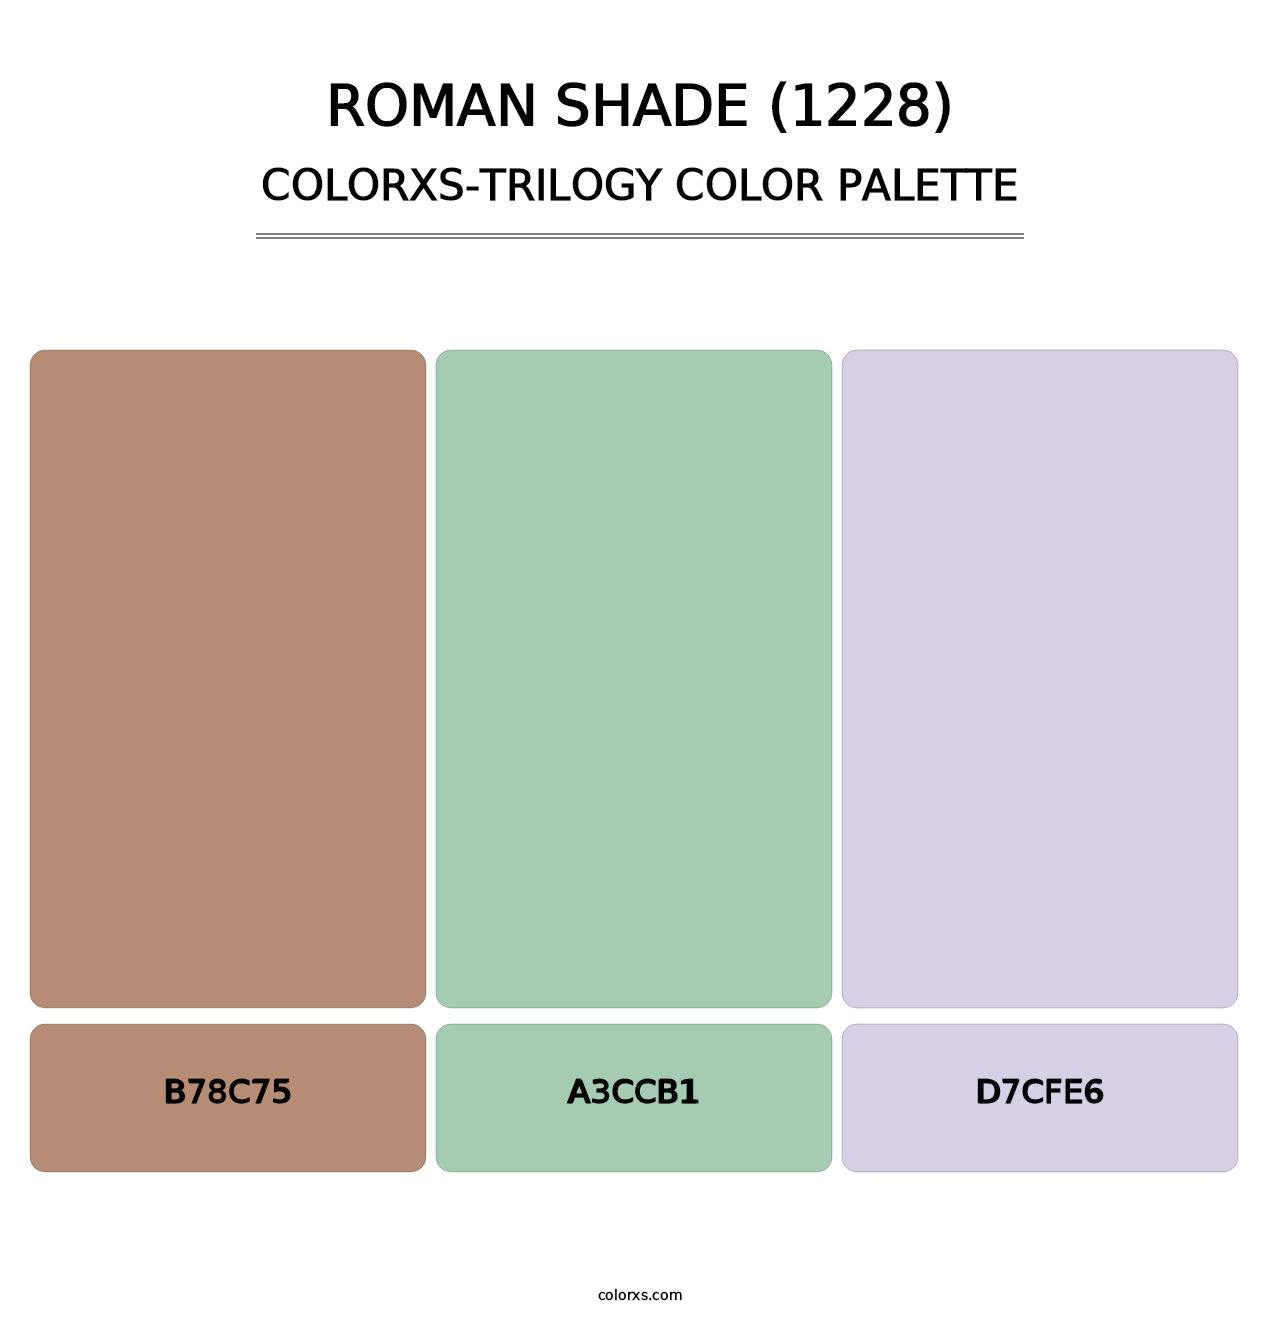 Roman Shade (1228) - Colorxs Trilogy Palette